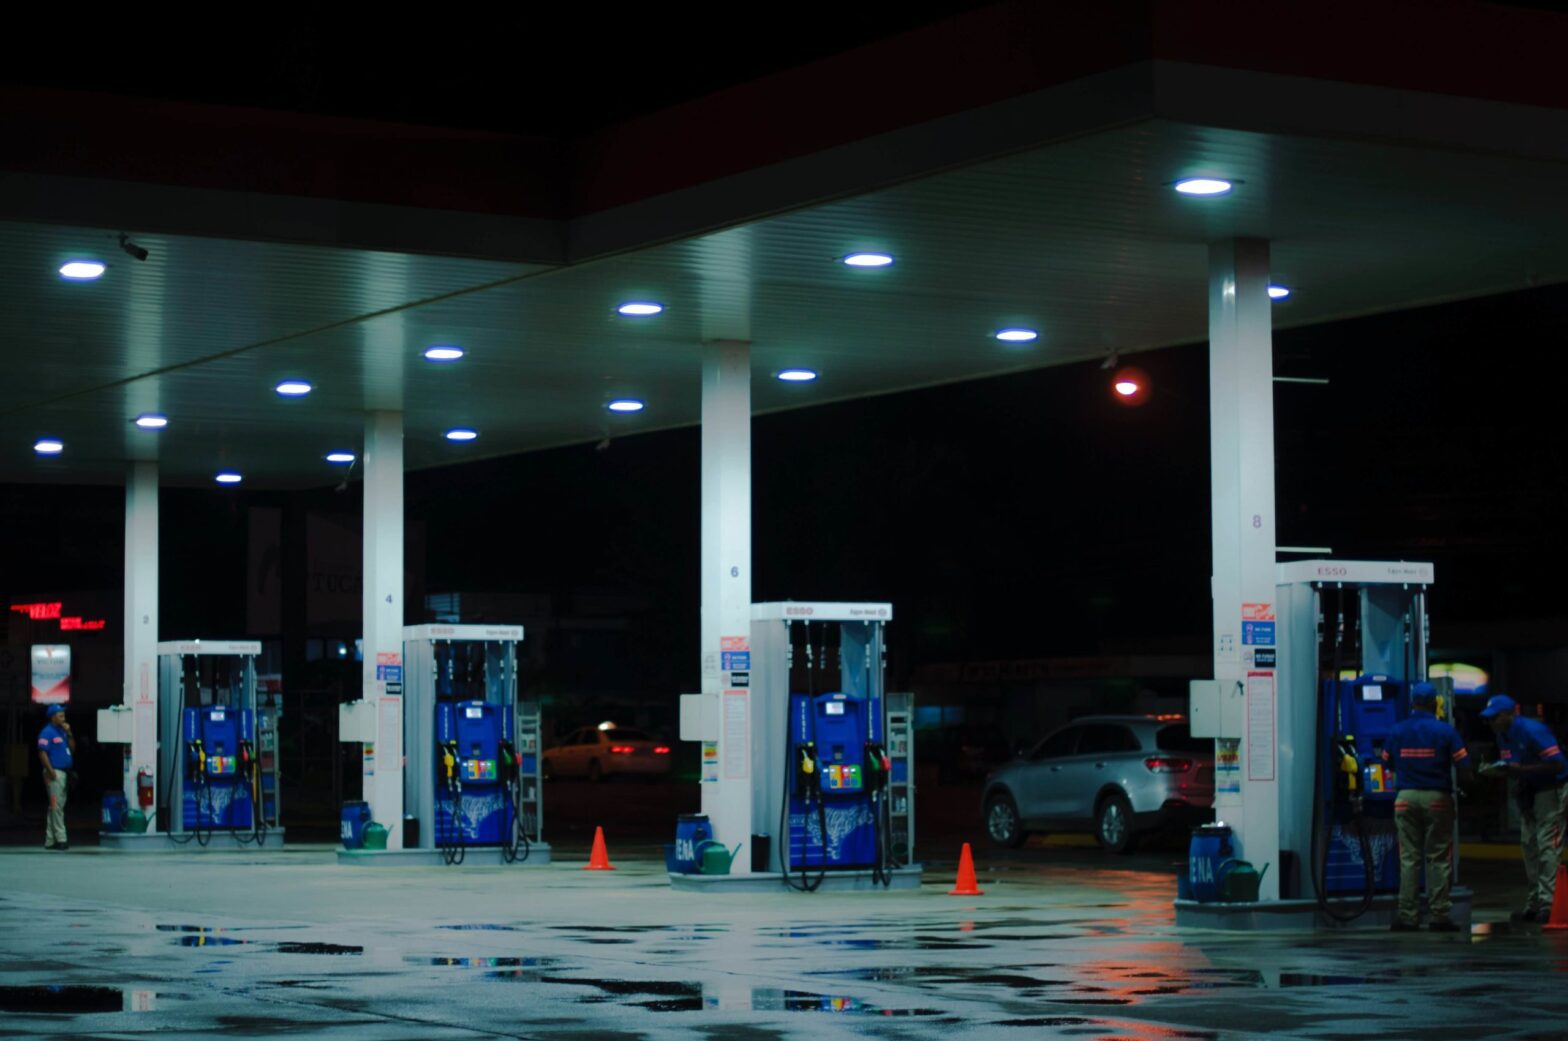 Fuel pumps Fuel management to control surging fuel prices